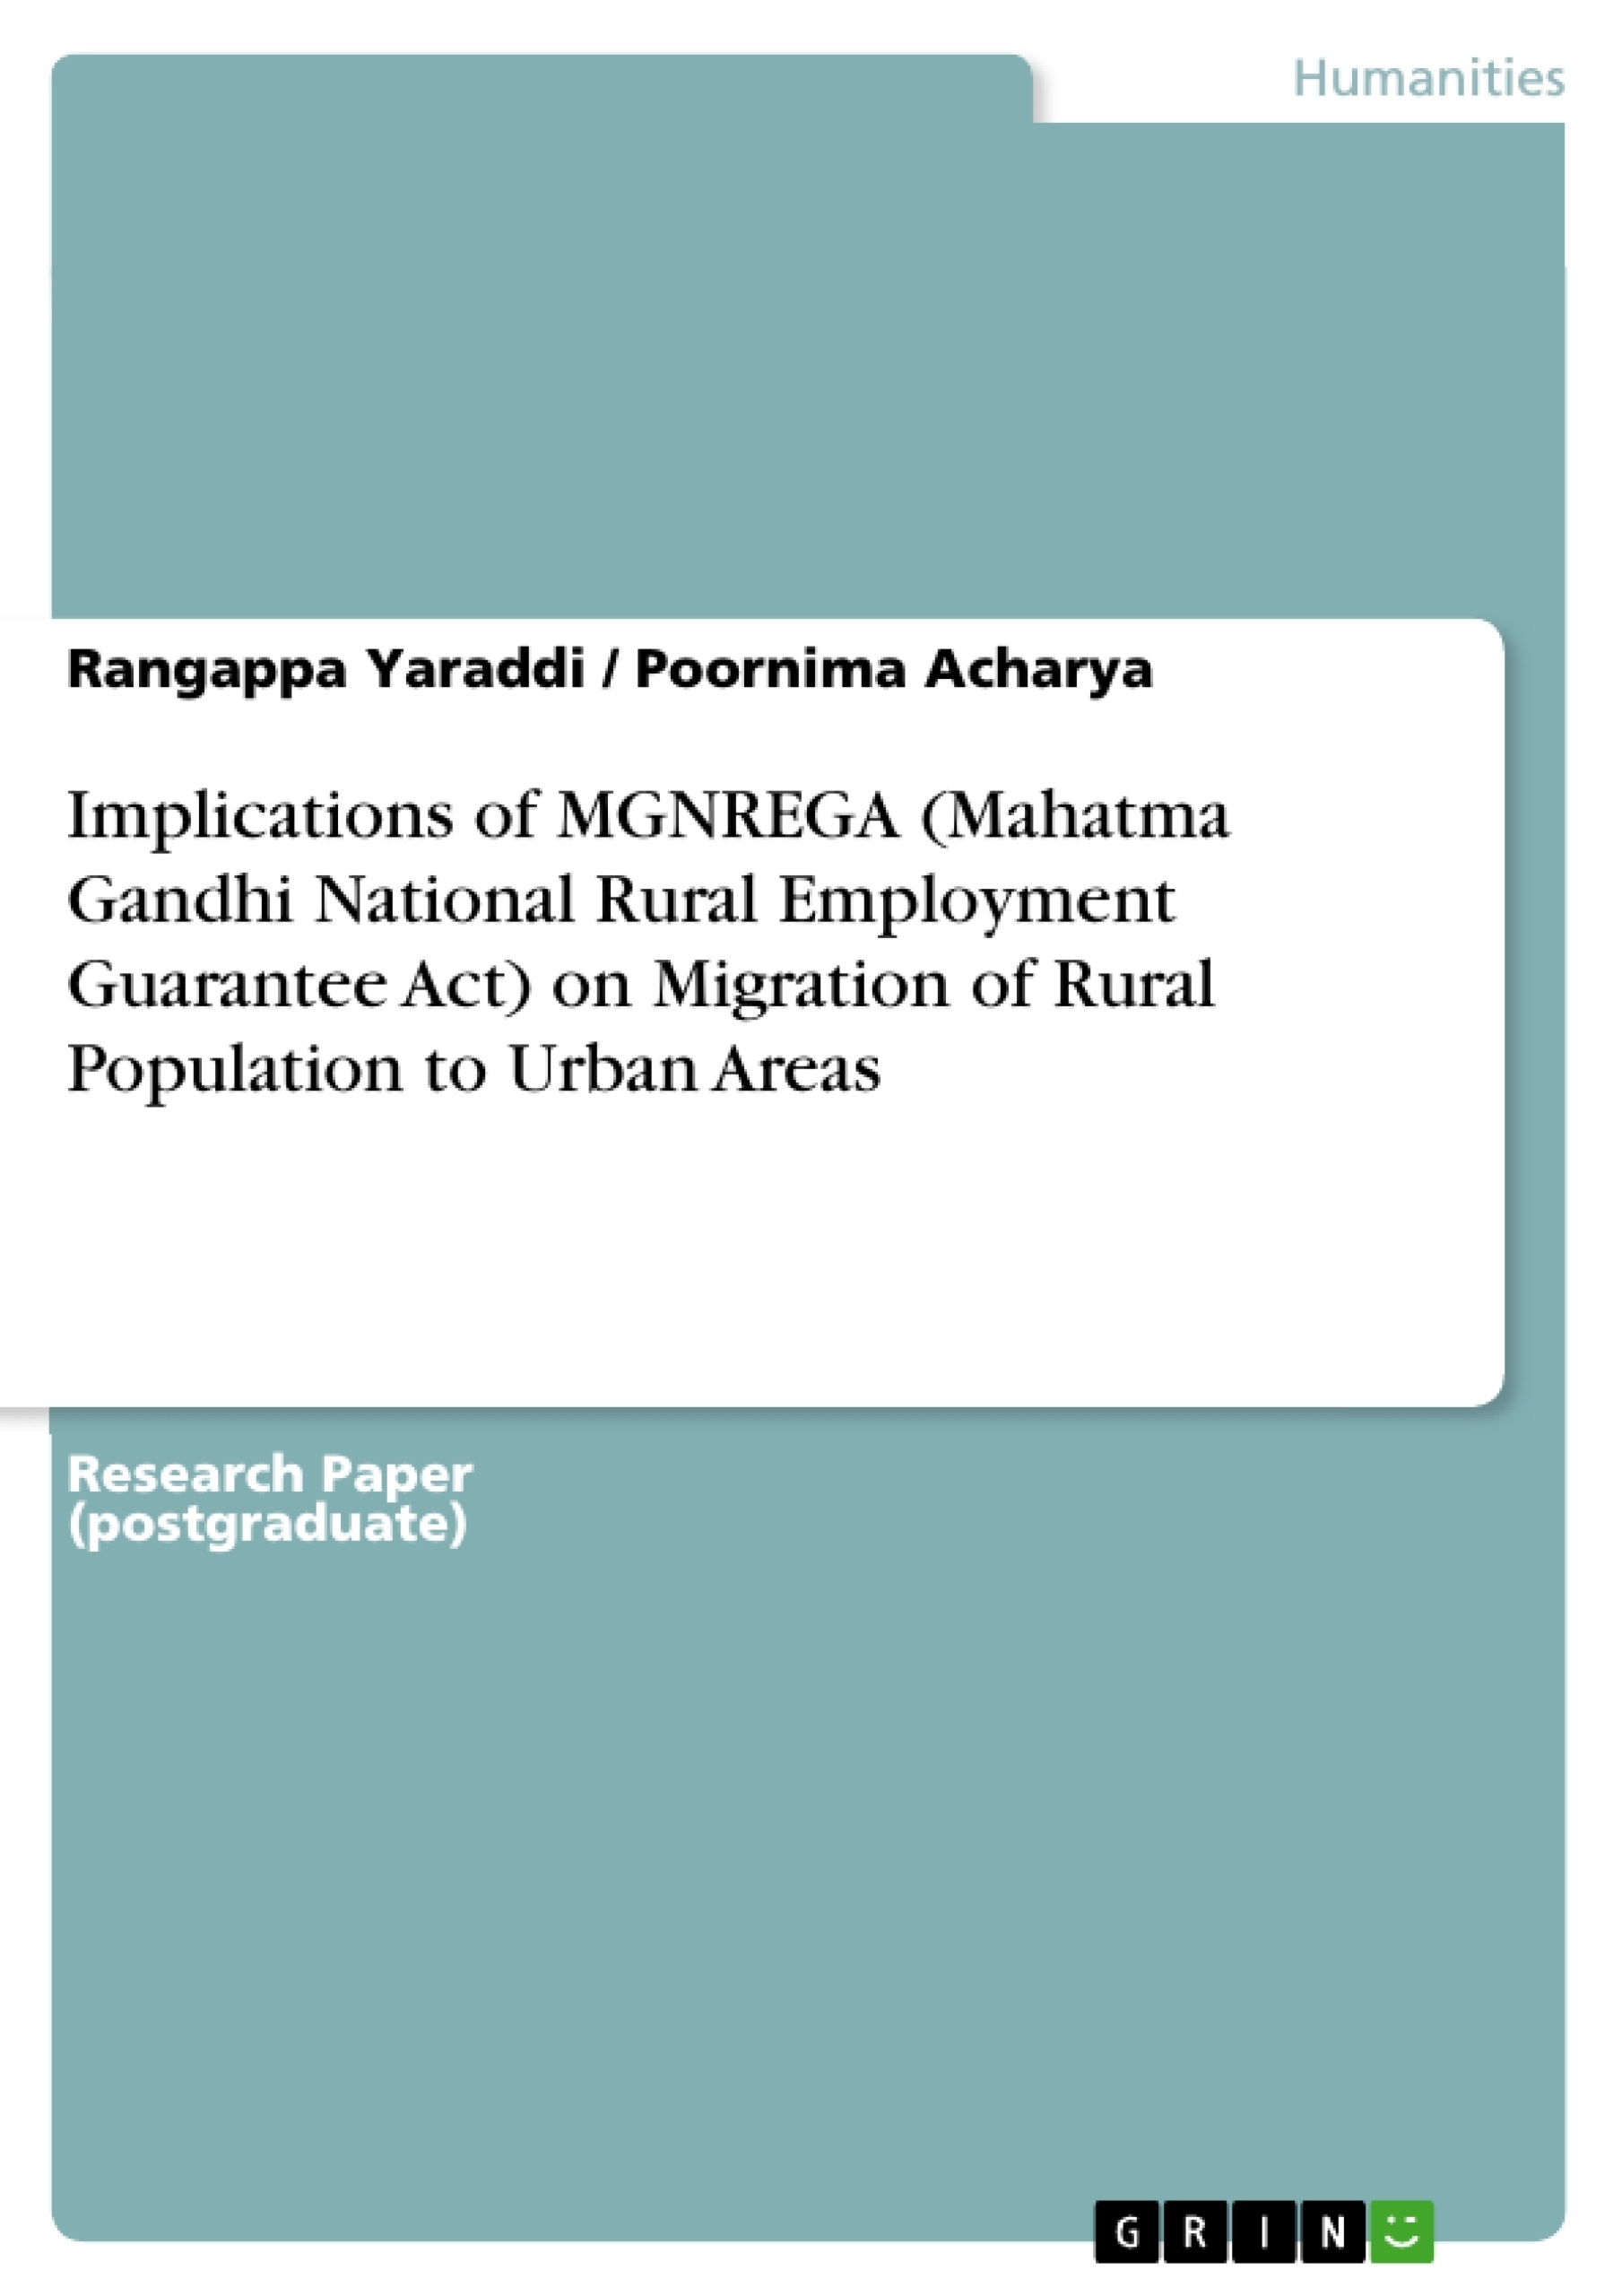 Title: Implications of MGNREGA (Mahatma Gandhi National Rural Employment Guarantee Act) on Migration of Rural Population to Urban Areas